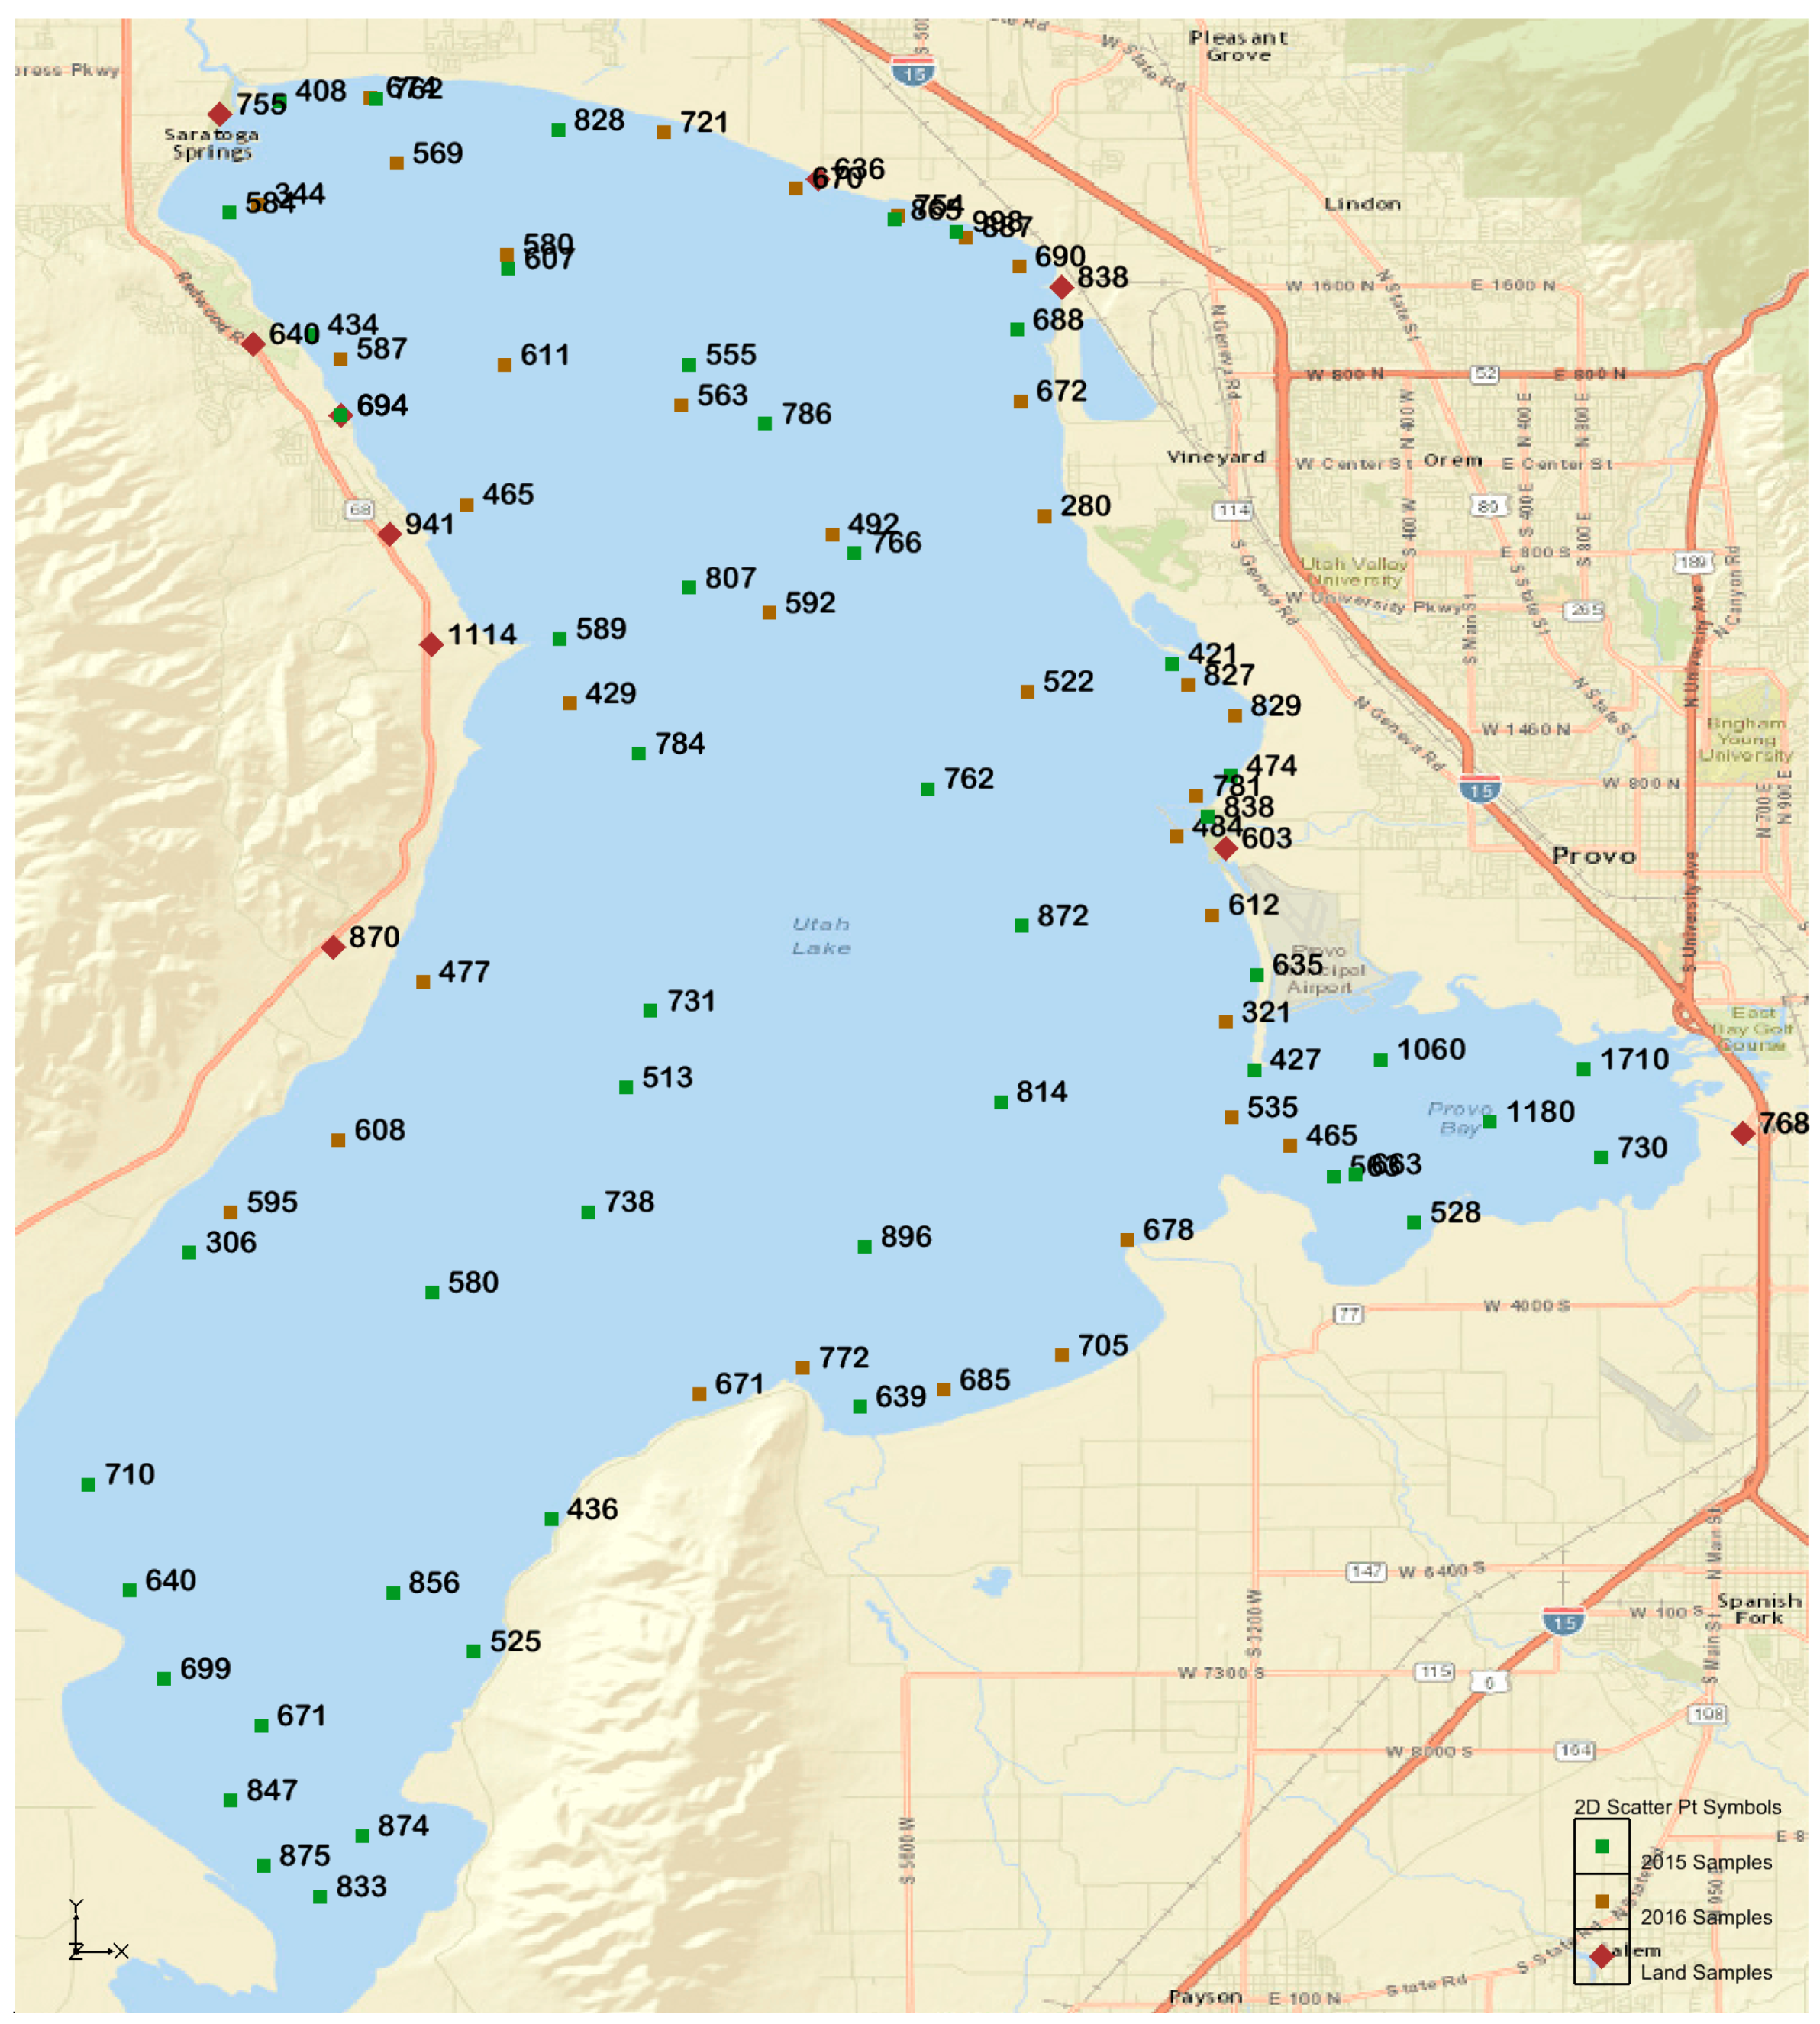 Great Lake Depth Chart